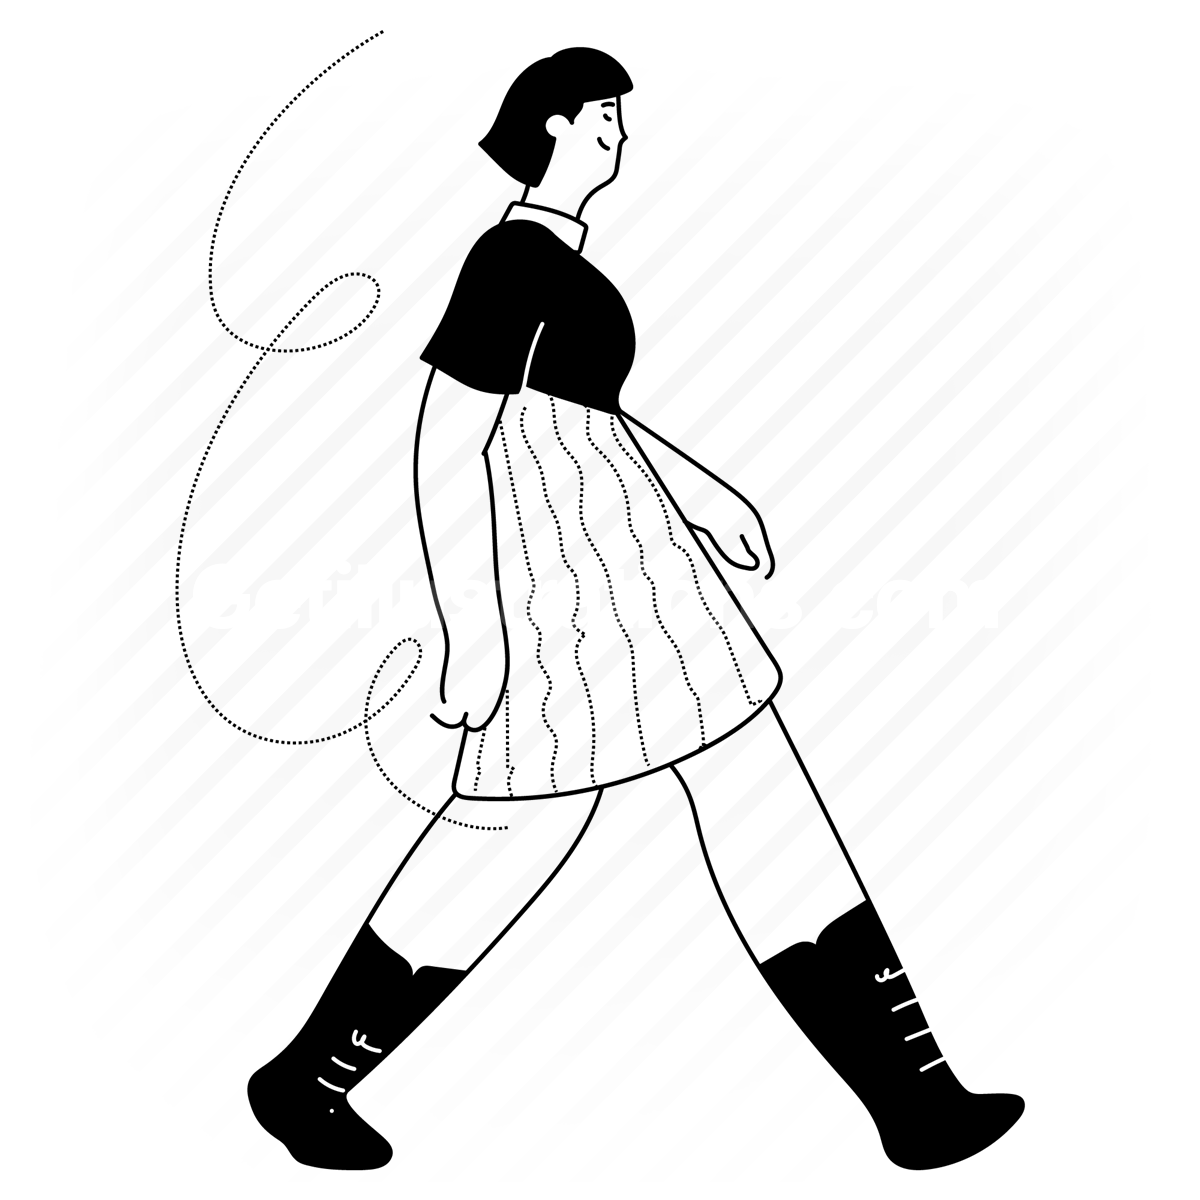 movement, motion, walk, walking, skirt, woman, people, person